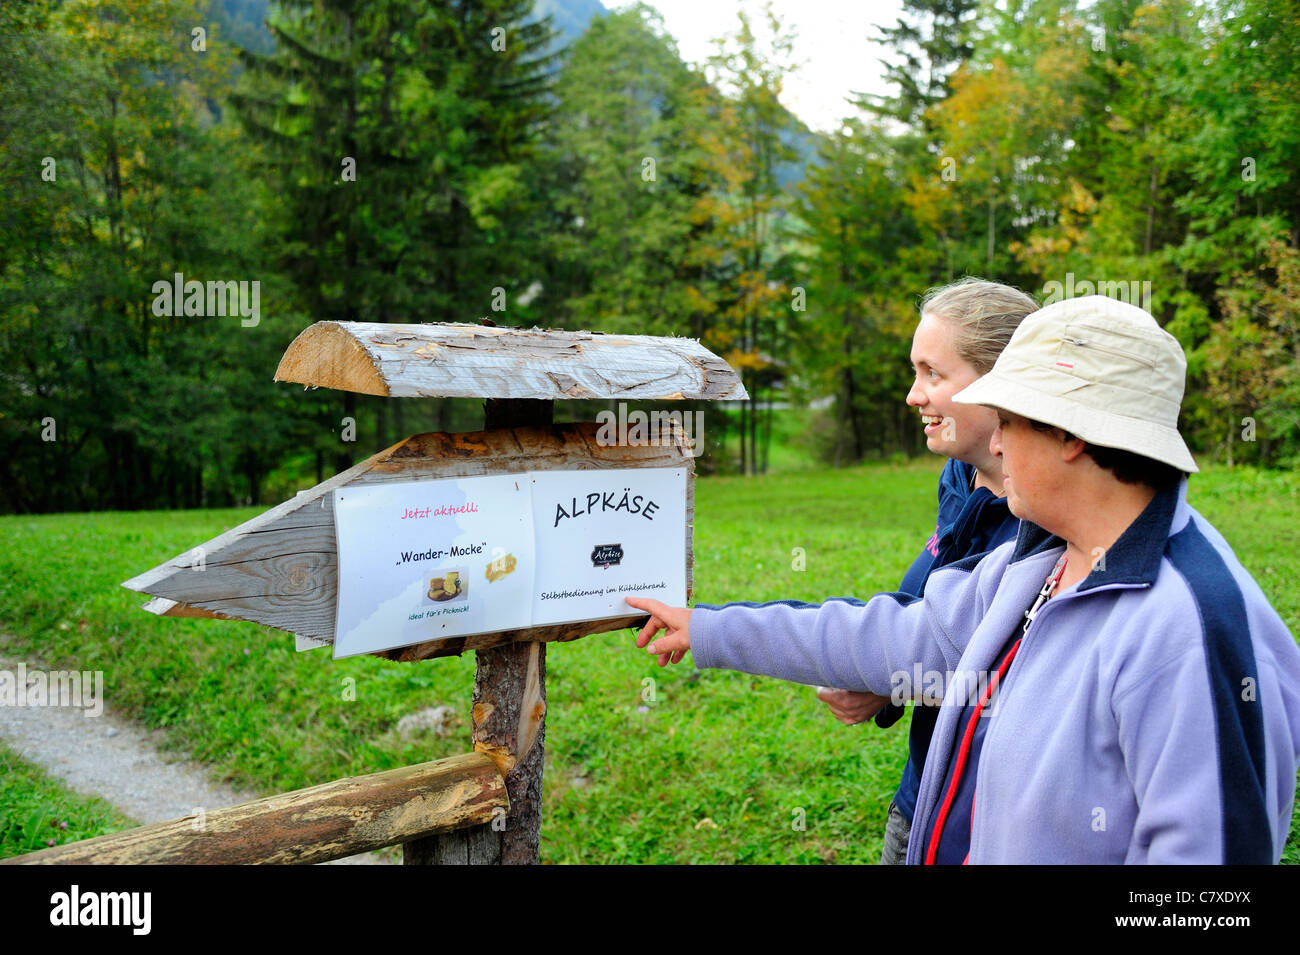 Swiss sign: reads 'Alpkäse – selbstbedienung im Kühlschrank' = 'Alp cheese - self service in fridge' Linked with image C7XDYB Stock Photo